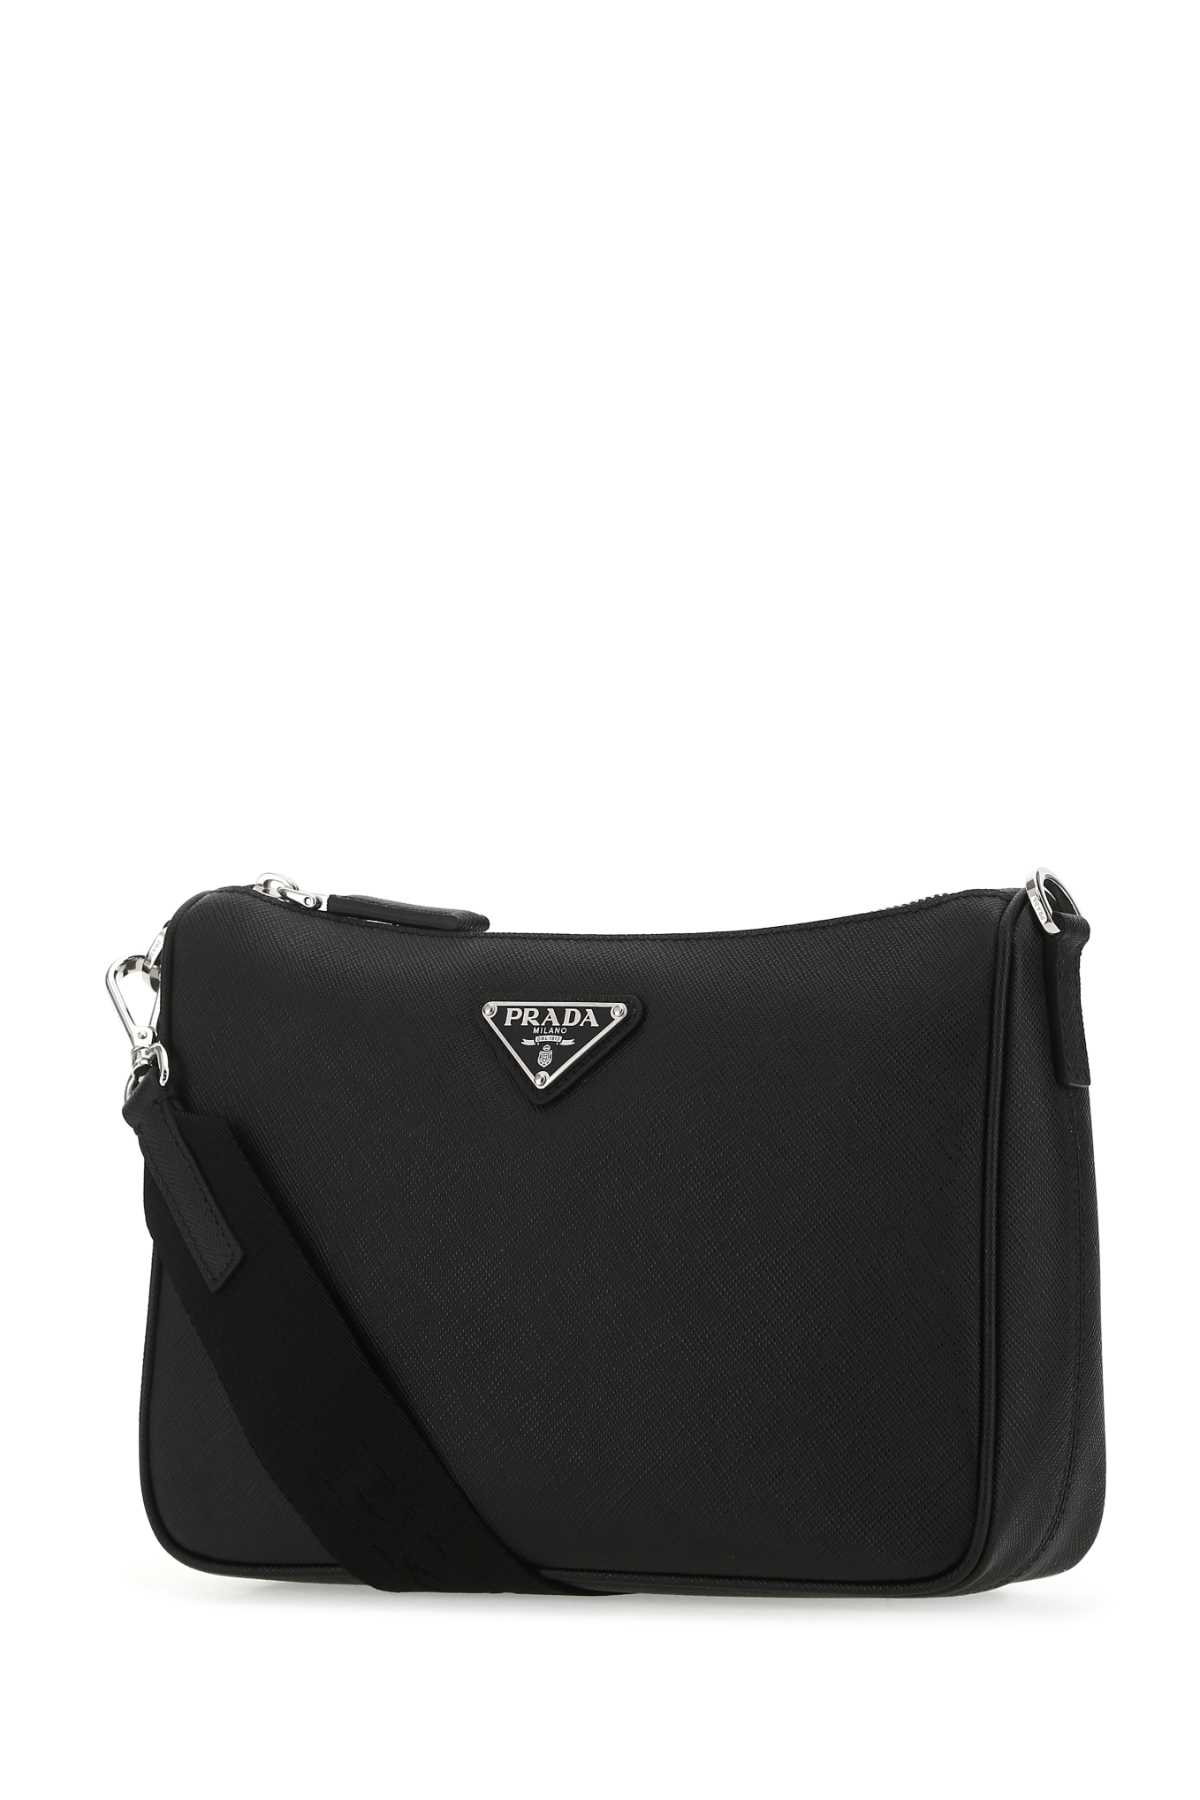 Prada Black Leather Crossbody Bag In F0002